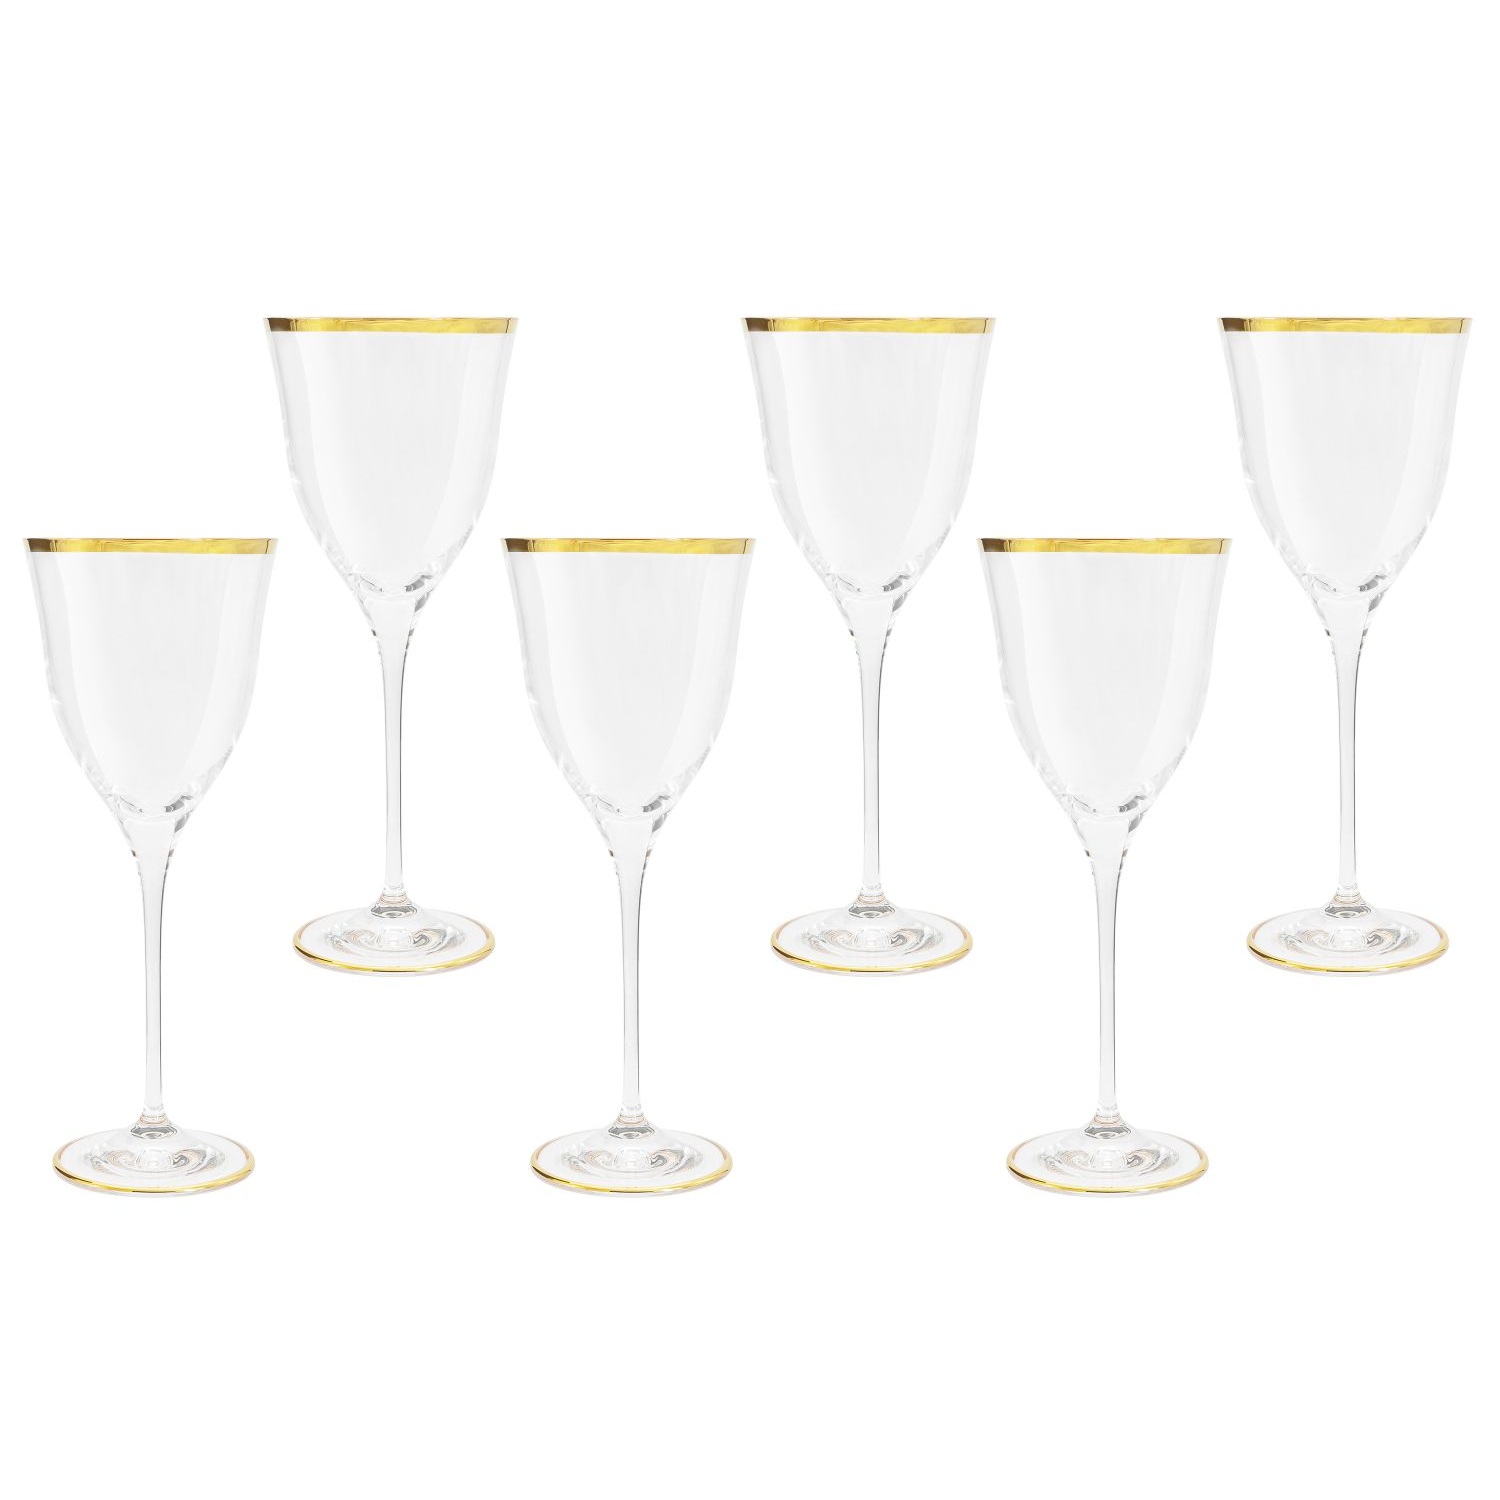 Набор бокалов для вина Same Сабина золото 6 шт набор бокалов для шампанского same сабина платина 6 шт